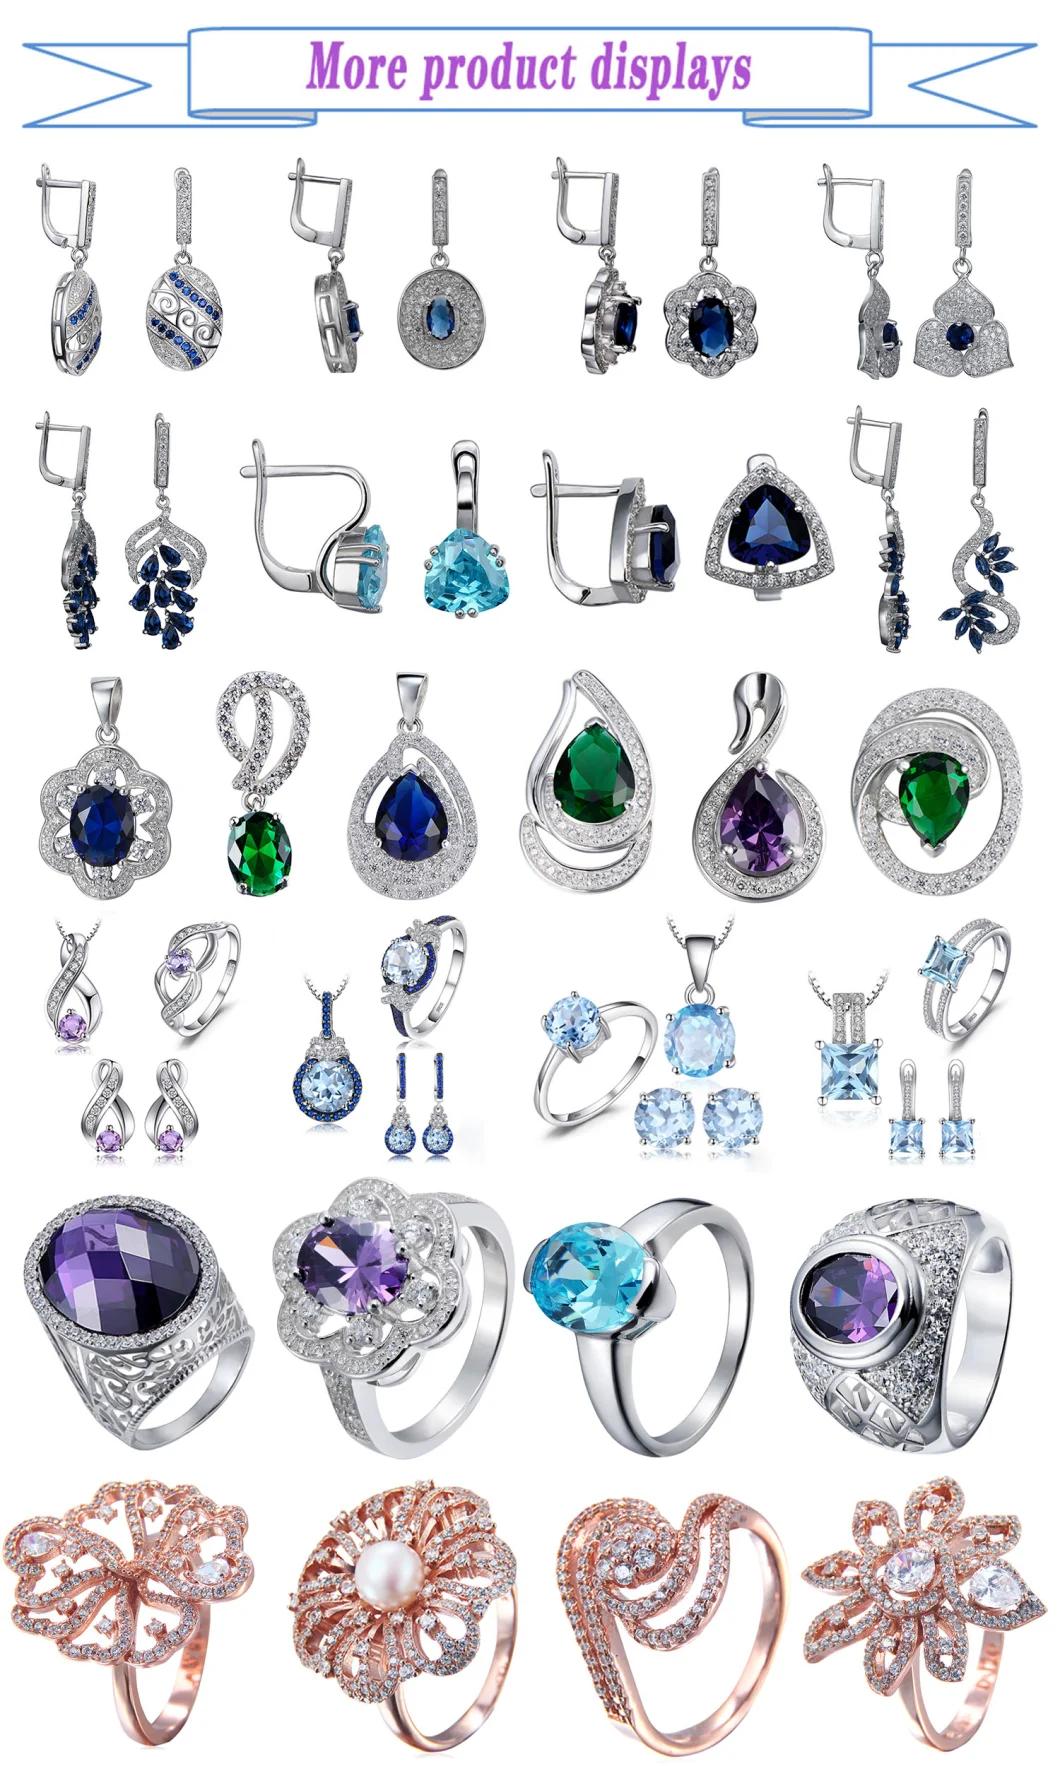 925 Sterling Silver Flower Stud Earring Created Orange Sapphire Fashion Jewelry Wholesale